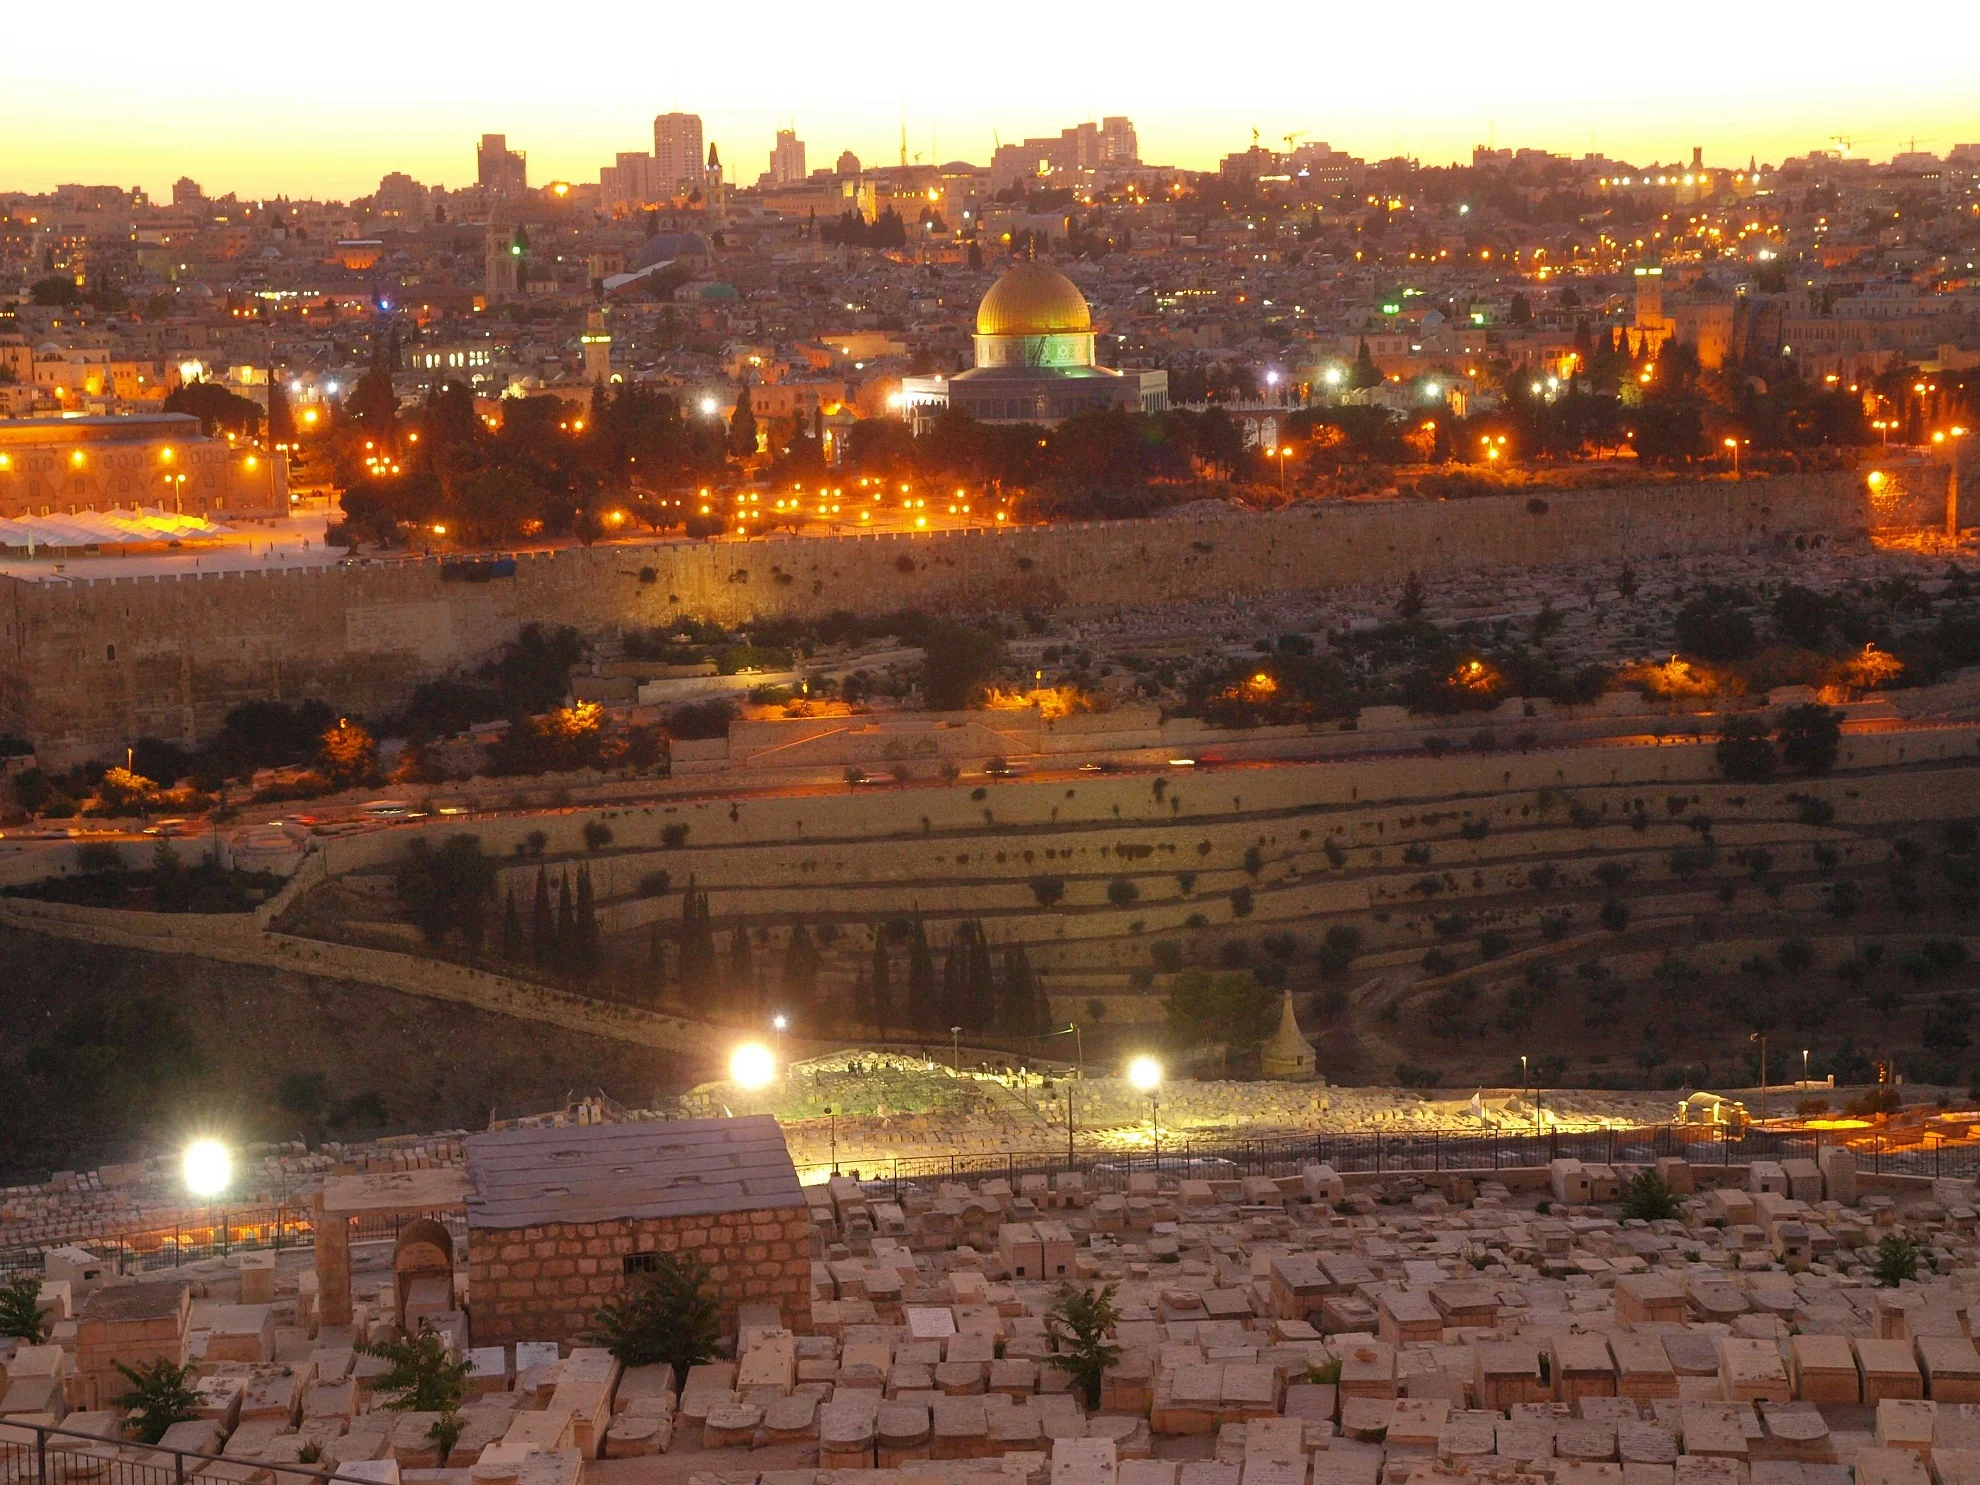 Yom HaZikaron Tours with the City of David